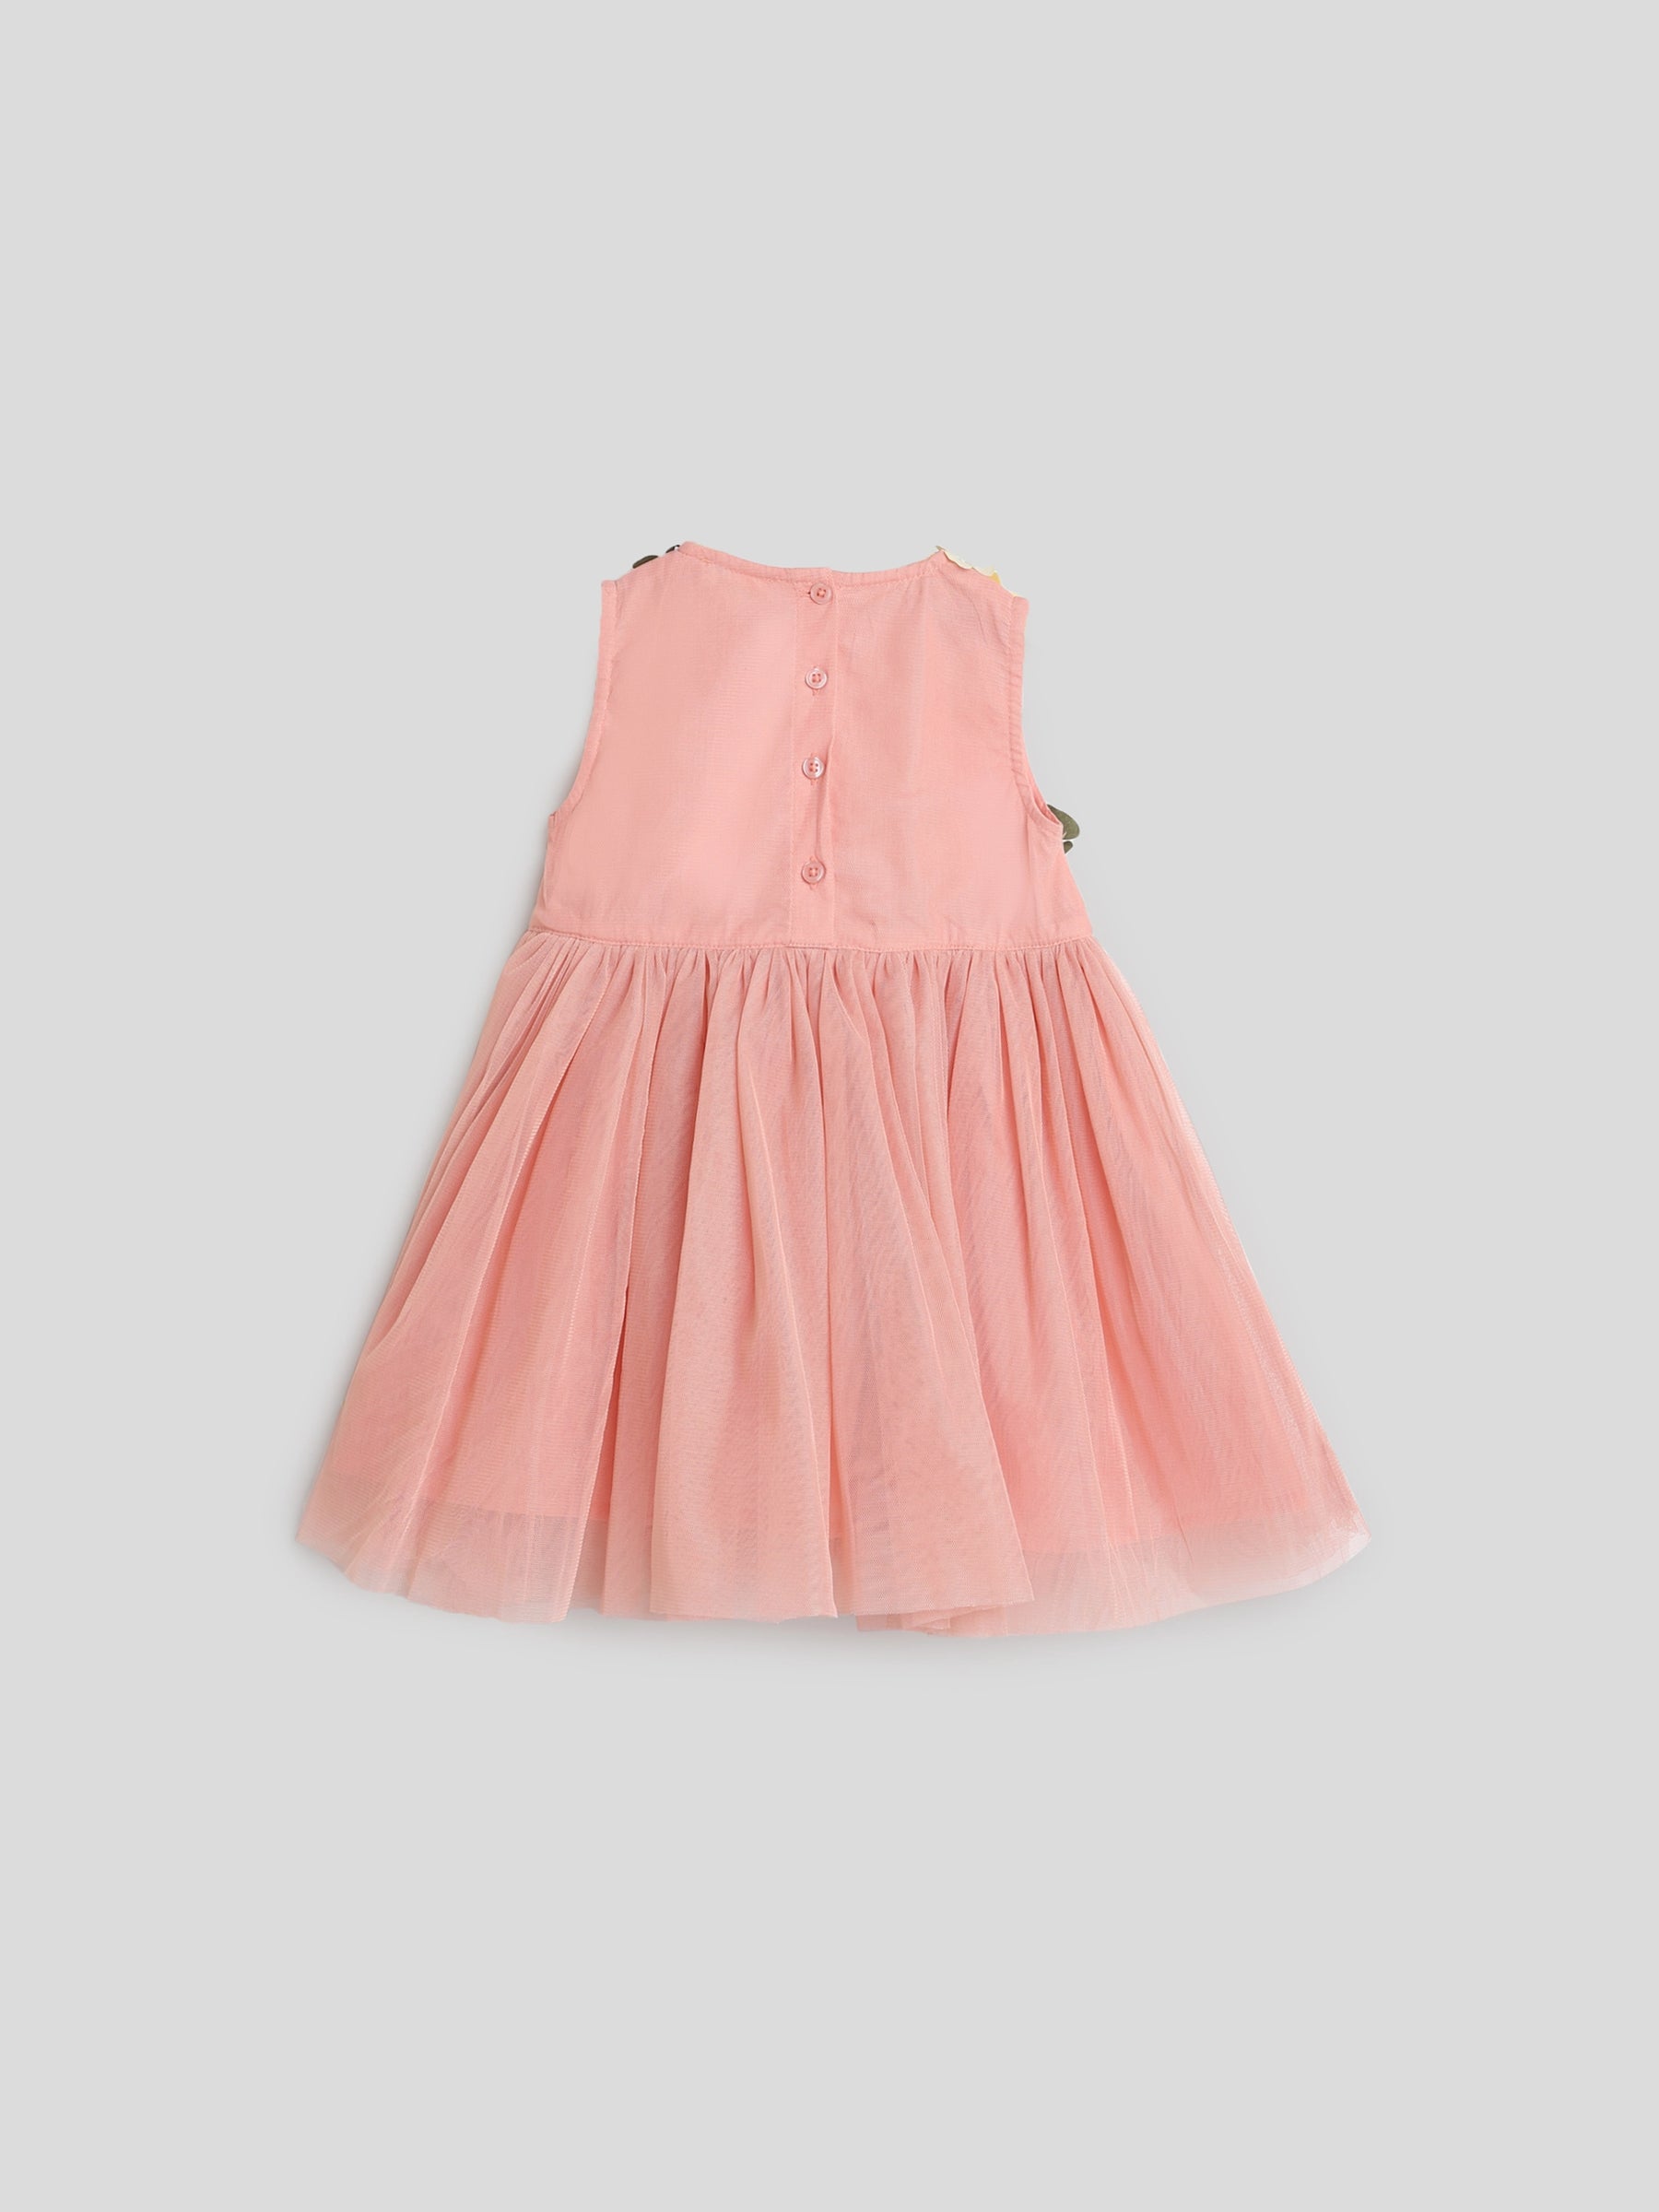 Pink Floral Tulle Dress Somersault